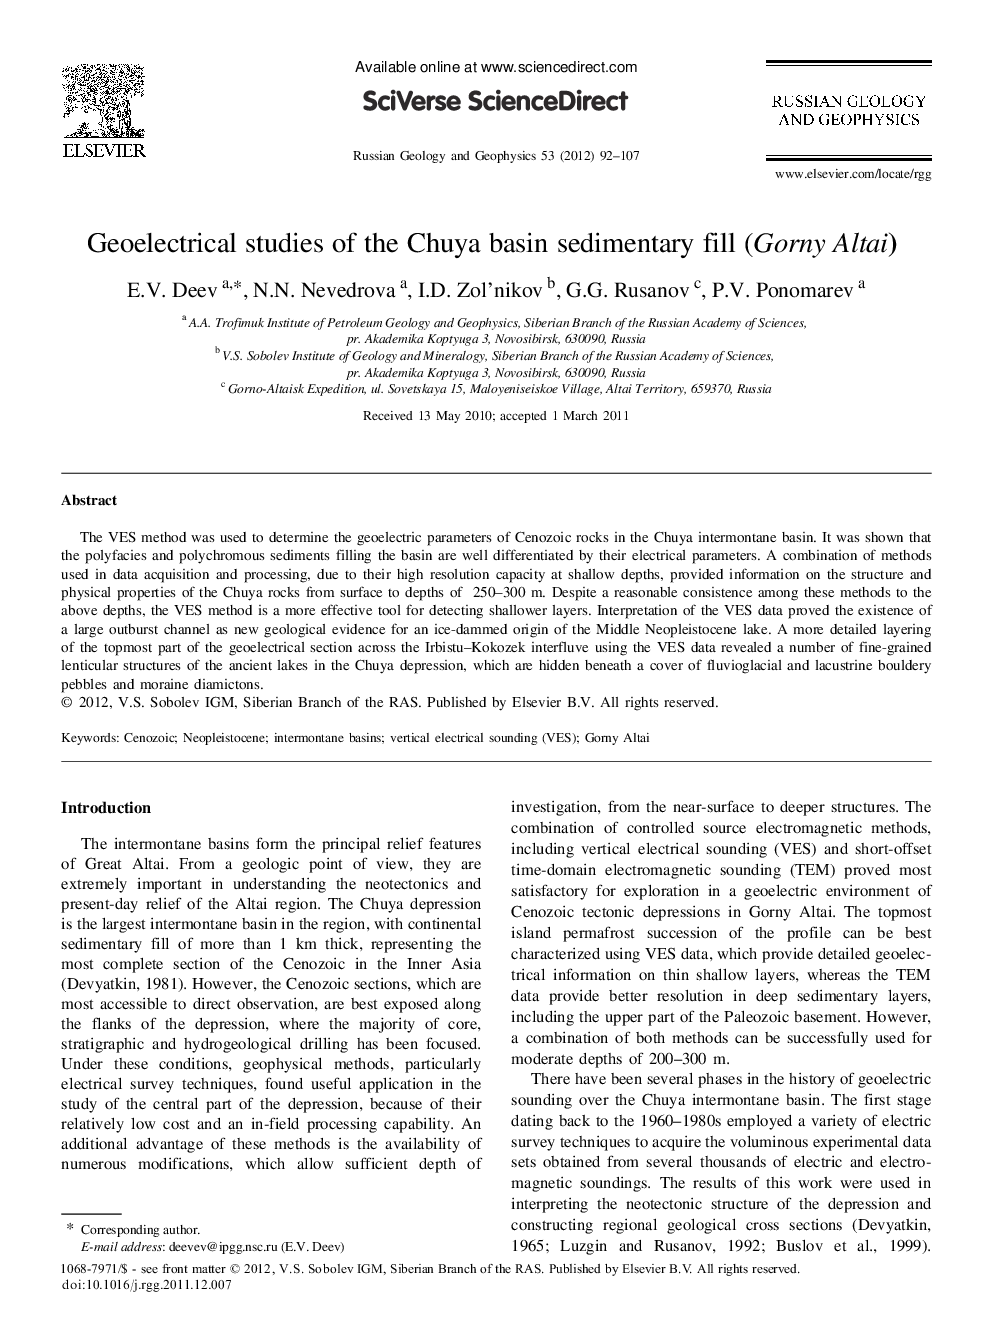 Geoelectrical studies of the Chuya basin sedimentary fill (Gorny Altai)